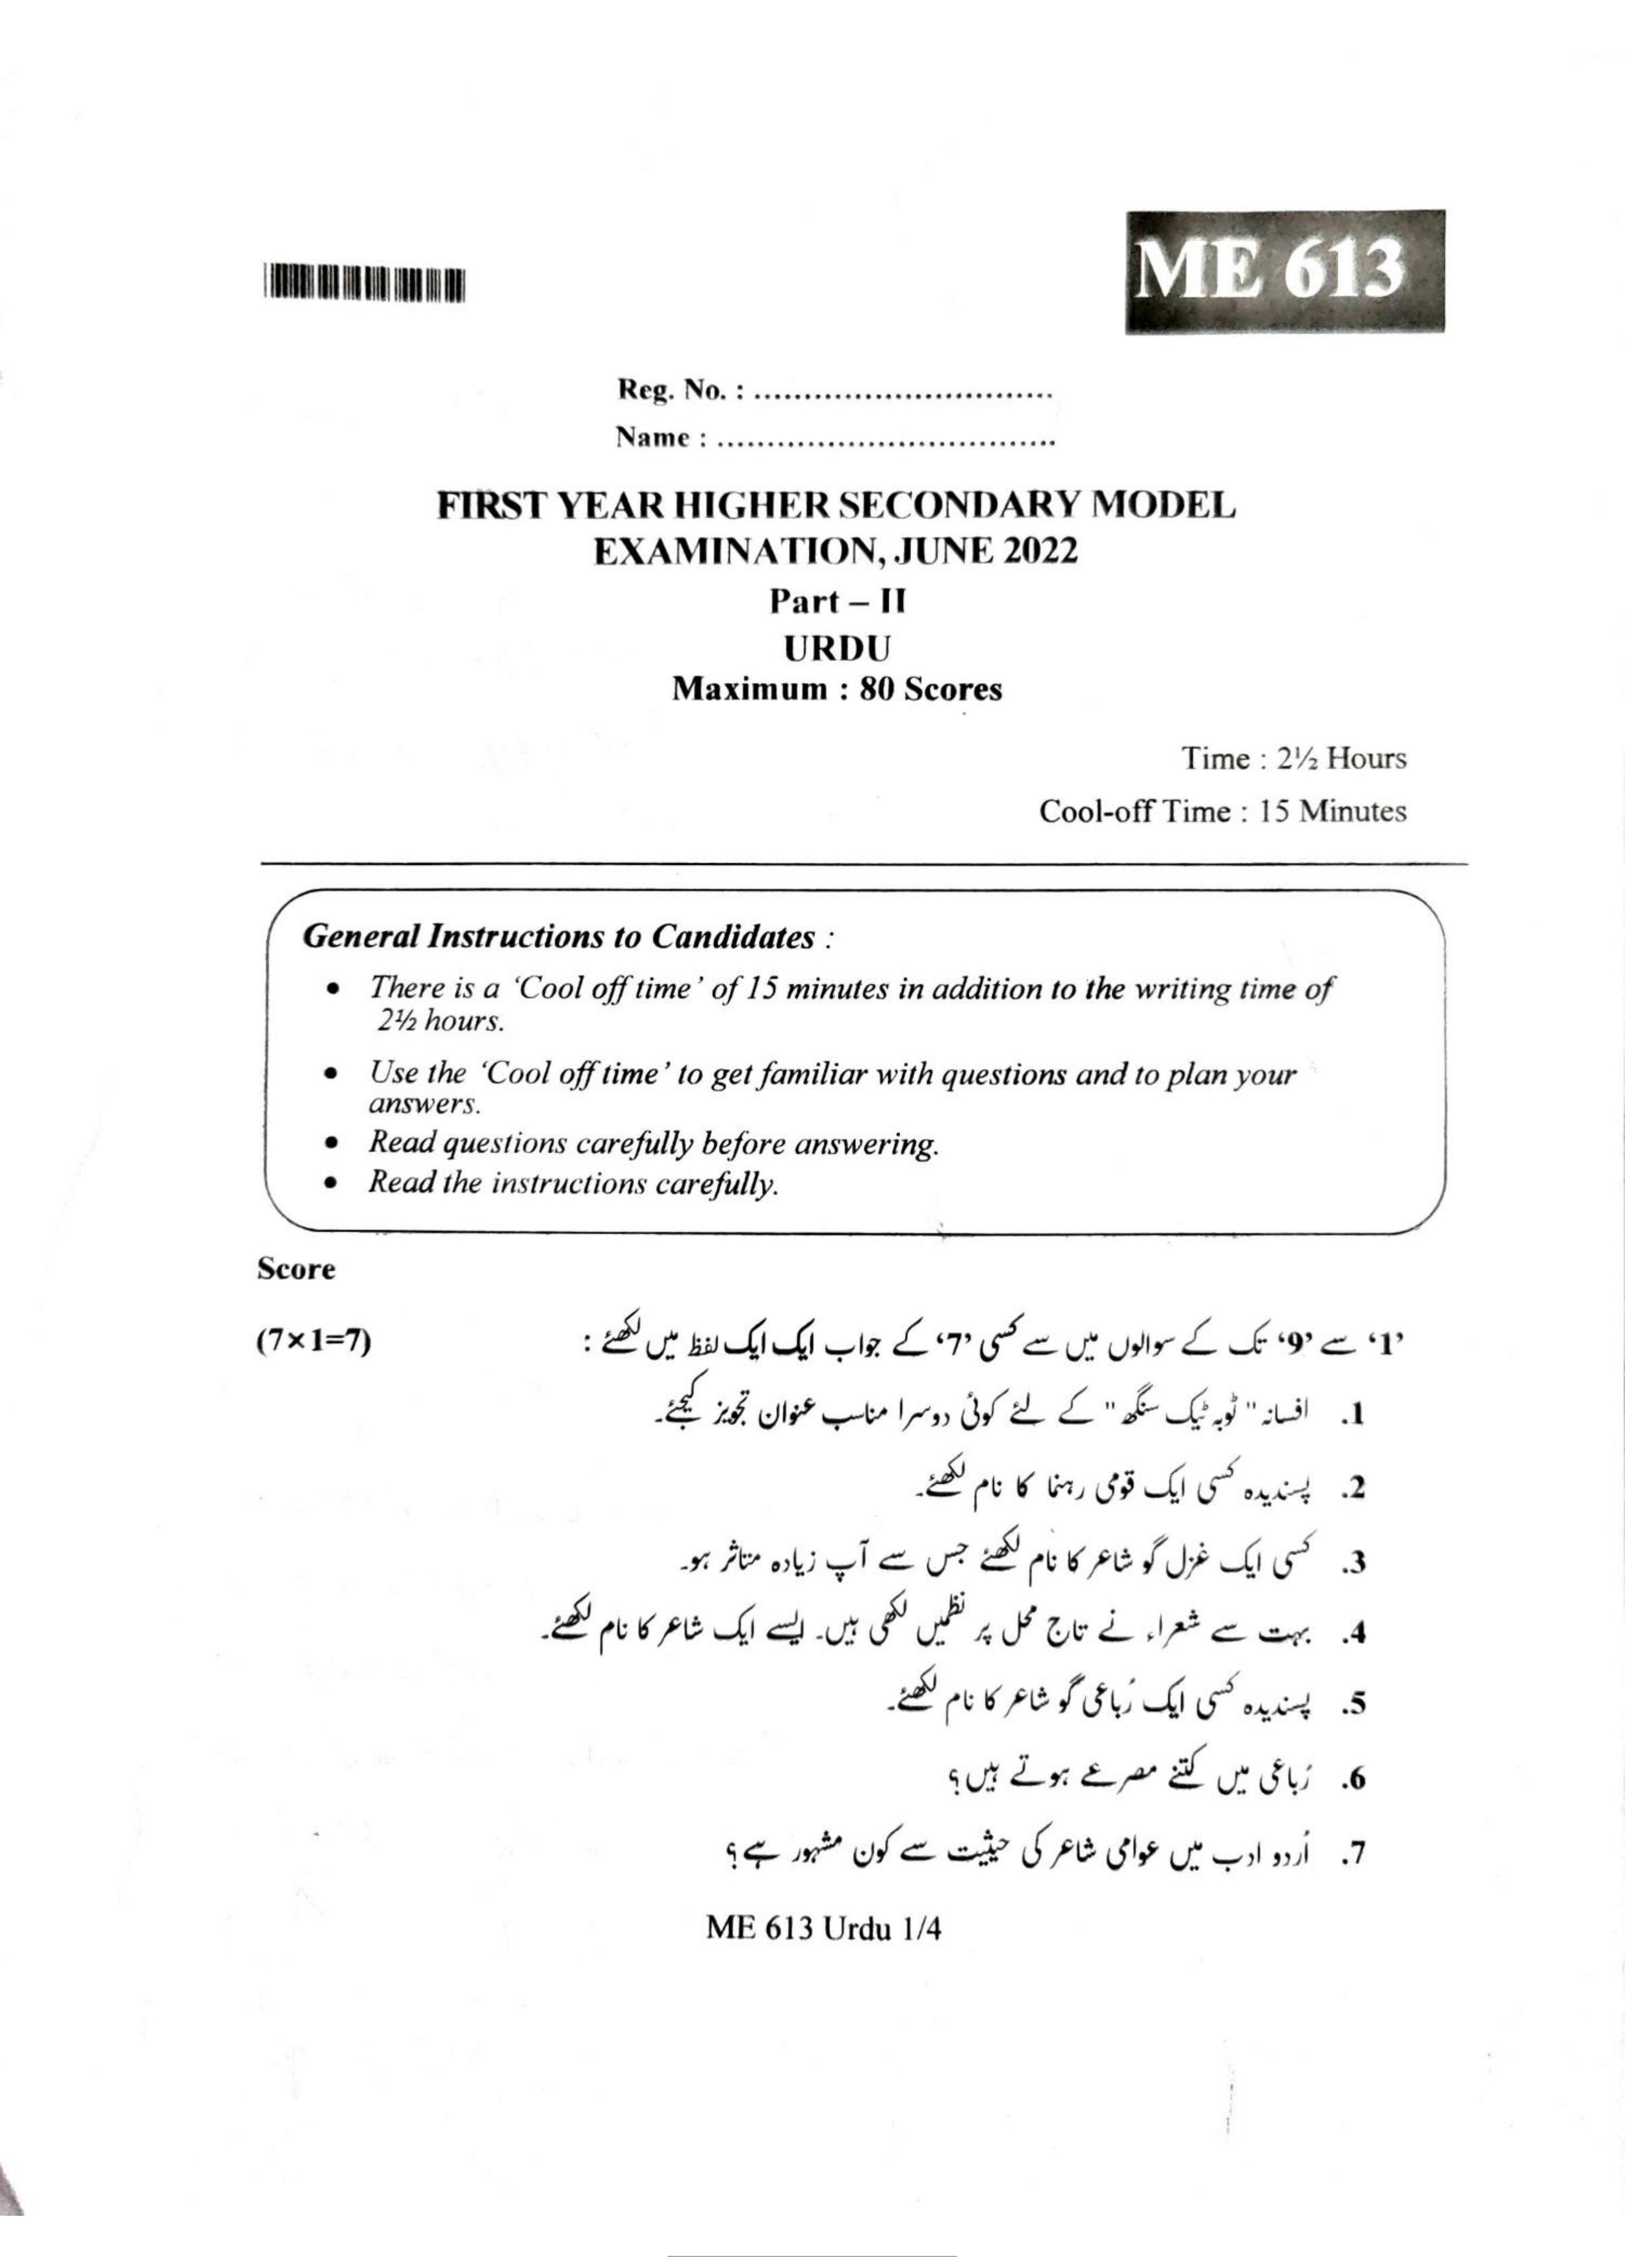 Kerala Plus One 2022 Urdu Question Papers (Model) - Page 1